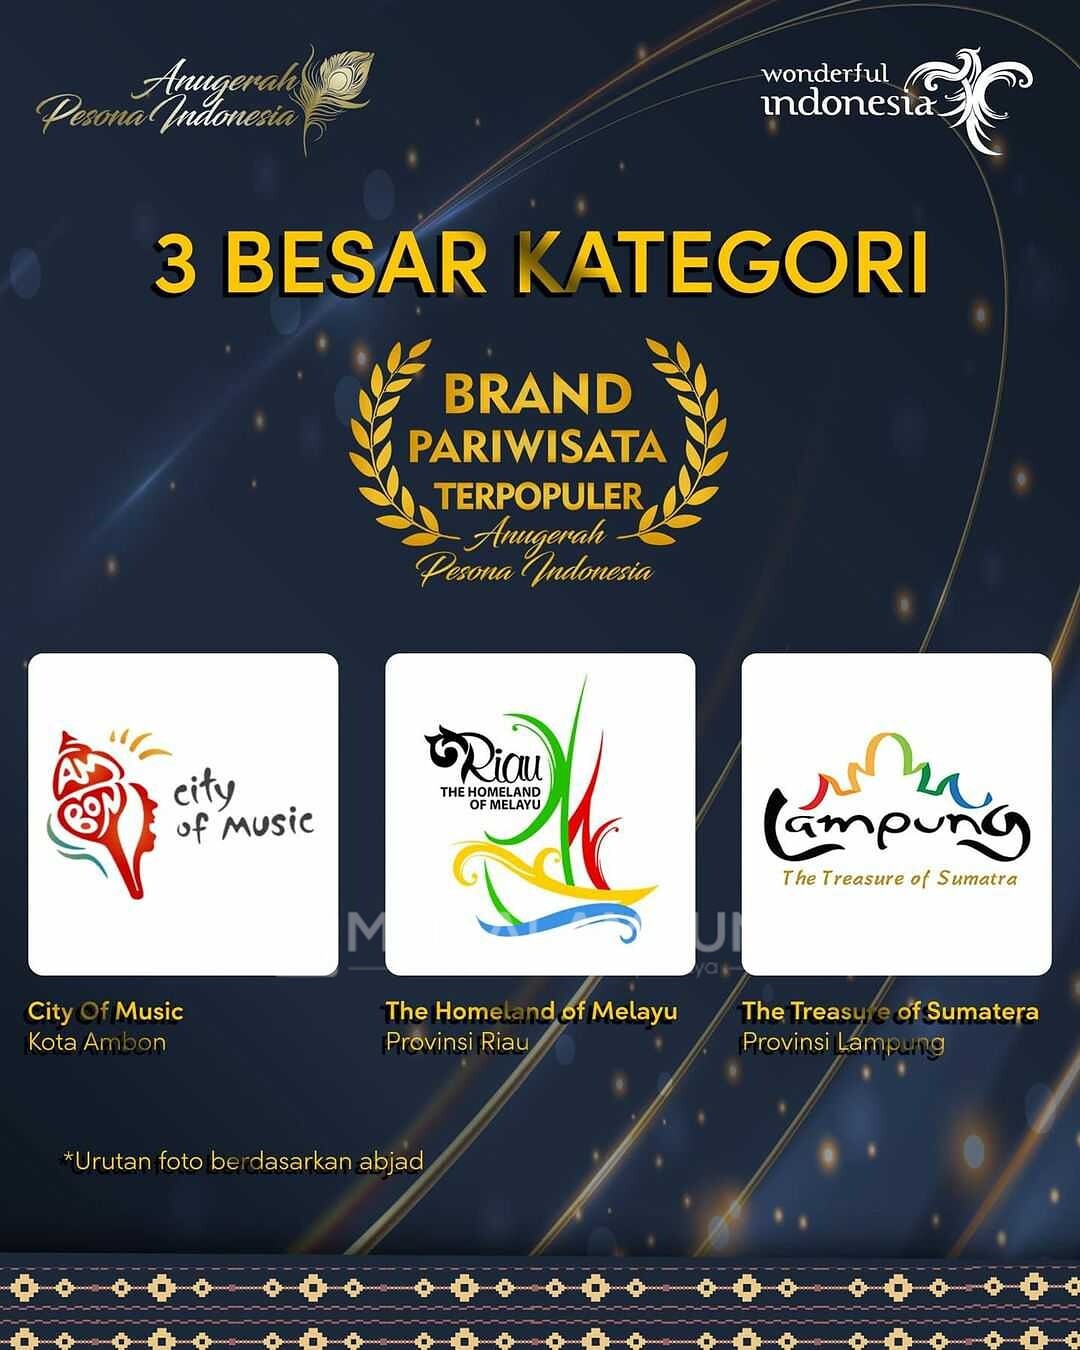 Lampung Masuk 3 Besar Brand Pariwisata Anugerah Pesona Indonesia